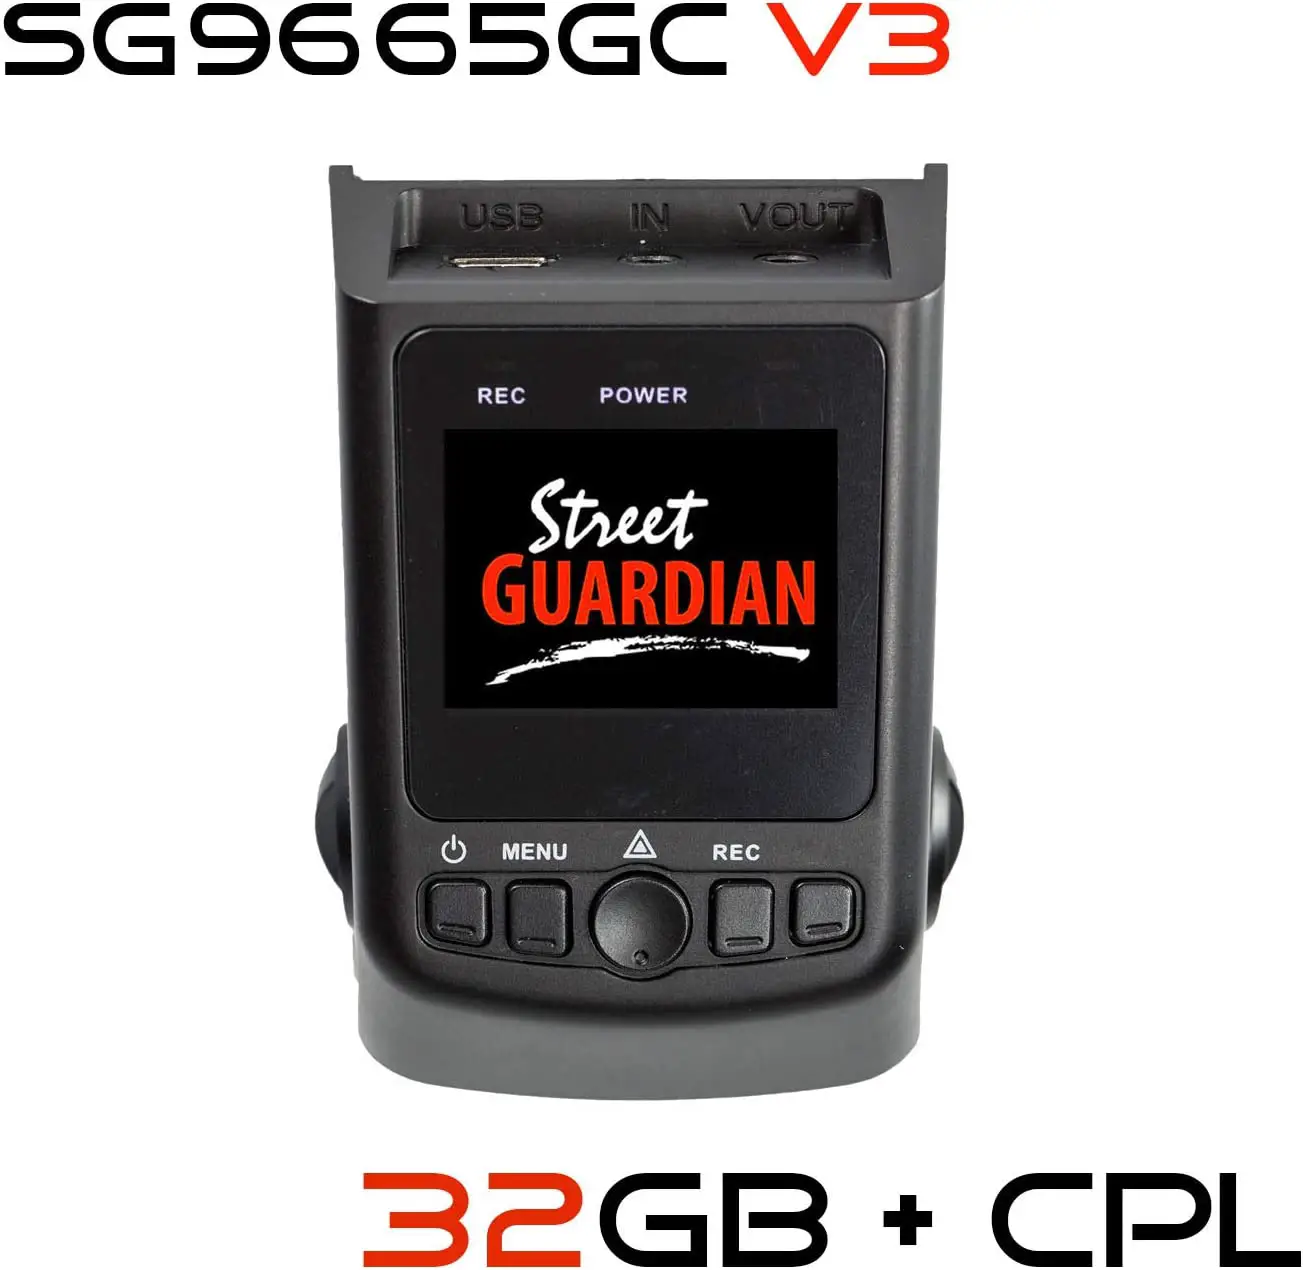 Street Guardian SG9665GC v3